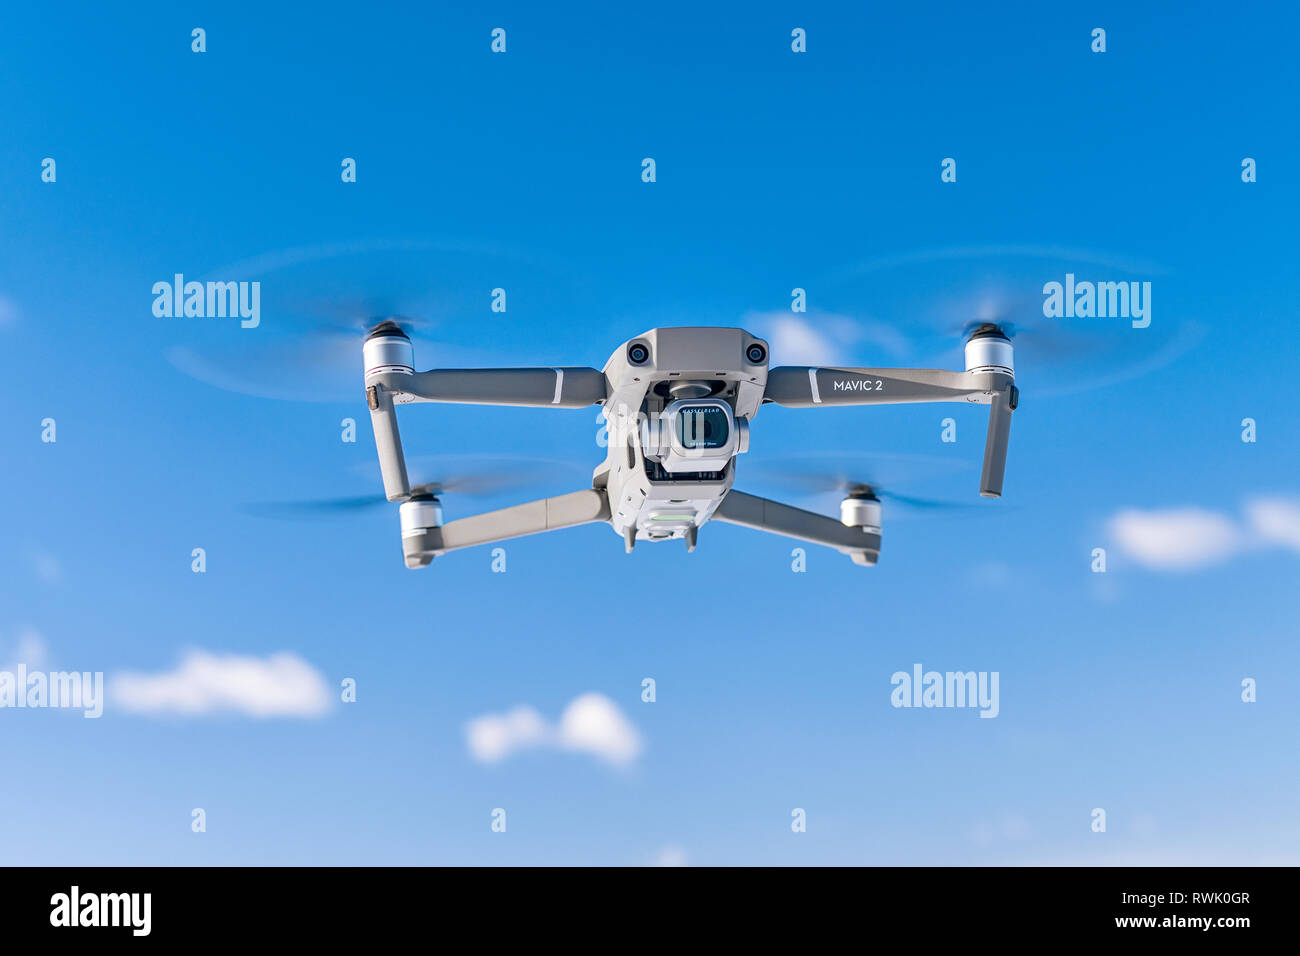 Saint Petersburg, Russia. March 01 2019. DJI Mavic 2 pro drone during flight against blue sky Stock Photo